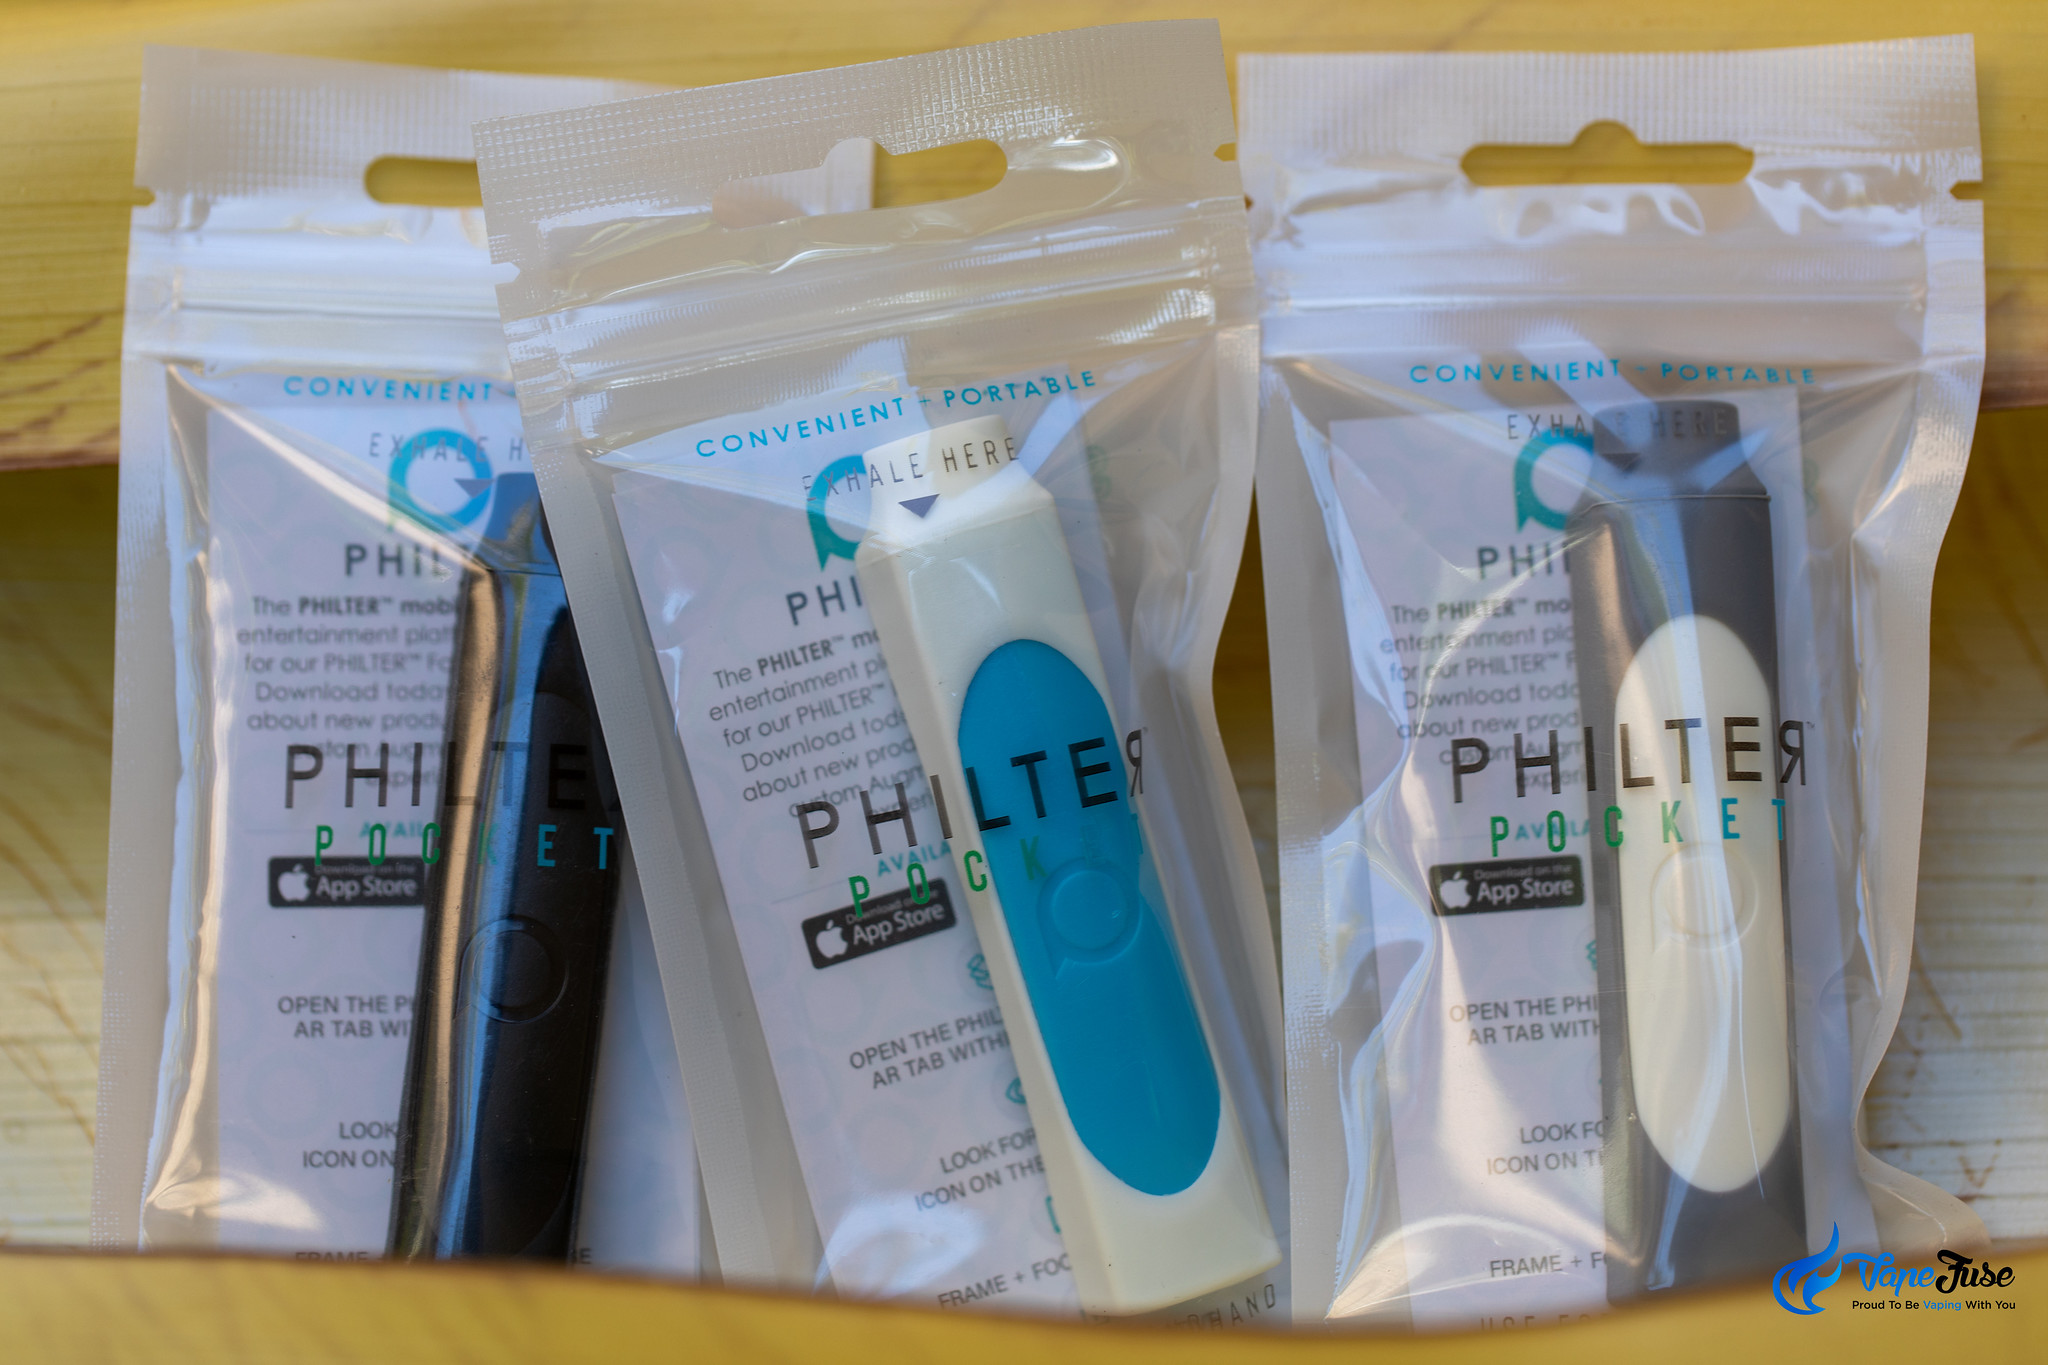 Philter Pocket Smoke Filters in Packaging